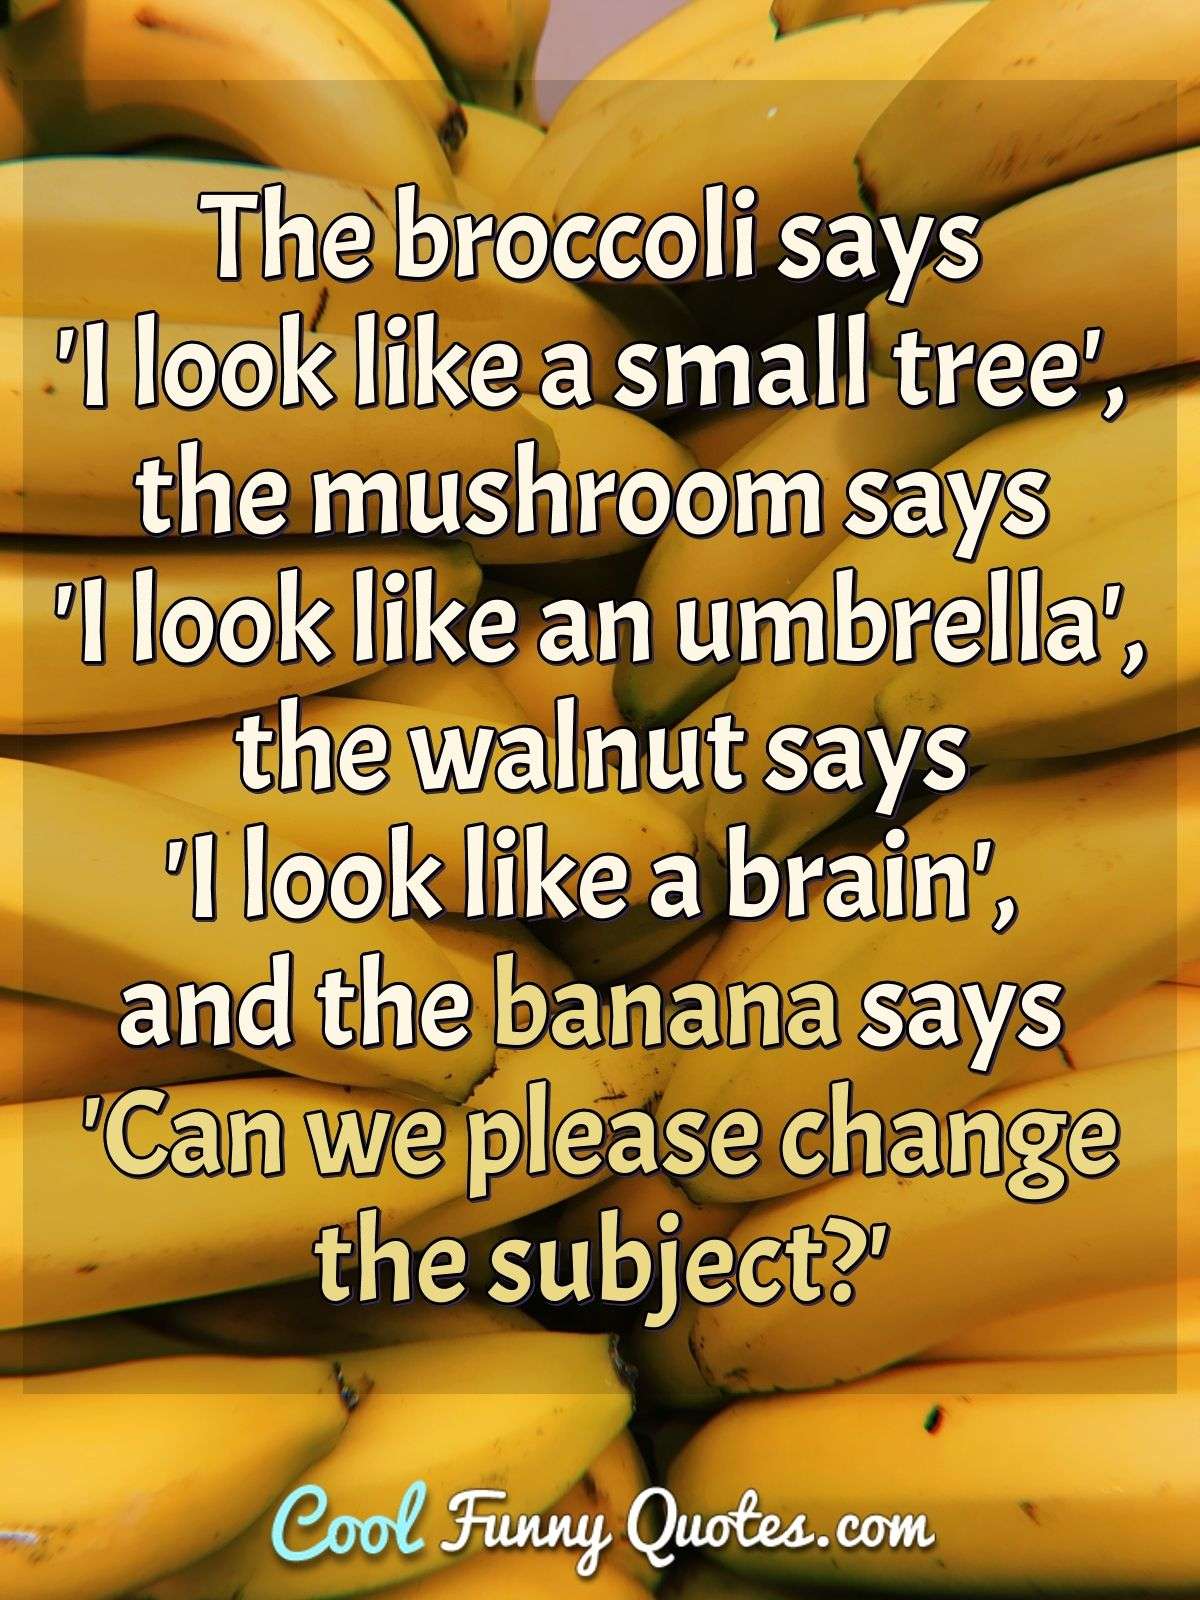 The broccoli says 'I look like a small tree', the mushroom says 'I look like an umbrella', the walnut says 'I look like a brain', and the banana says 'Can we please change the subject?' - Anonymous